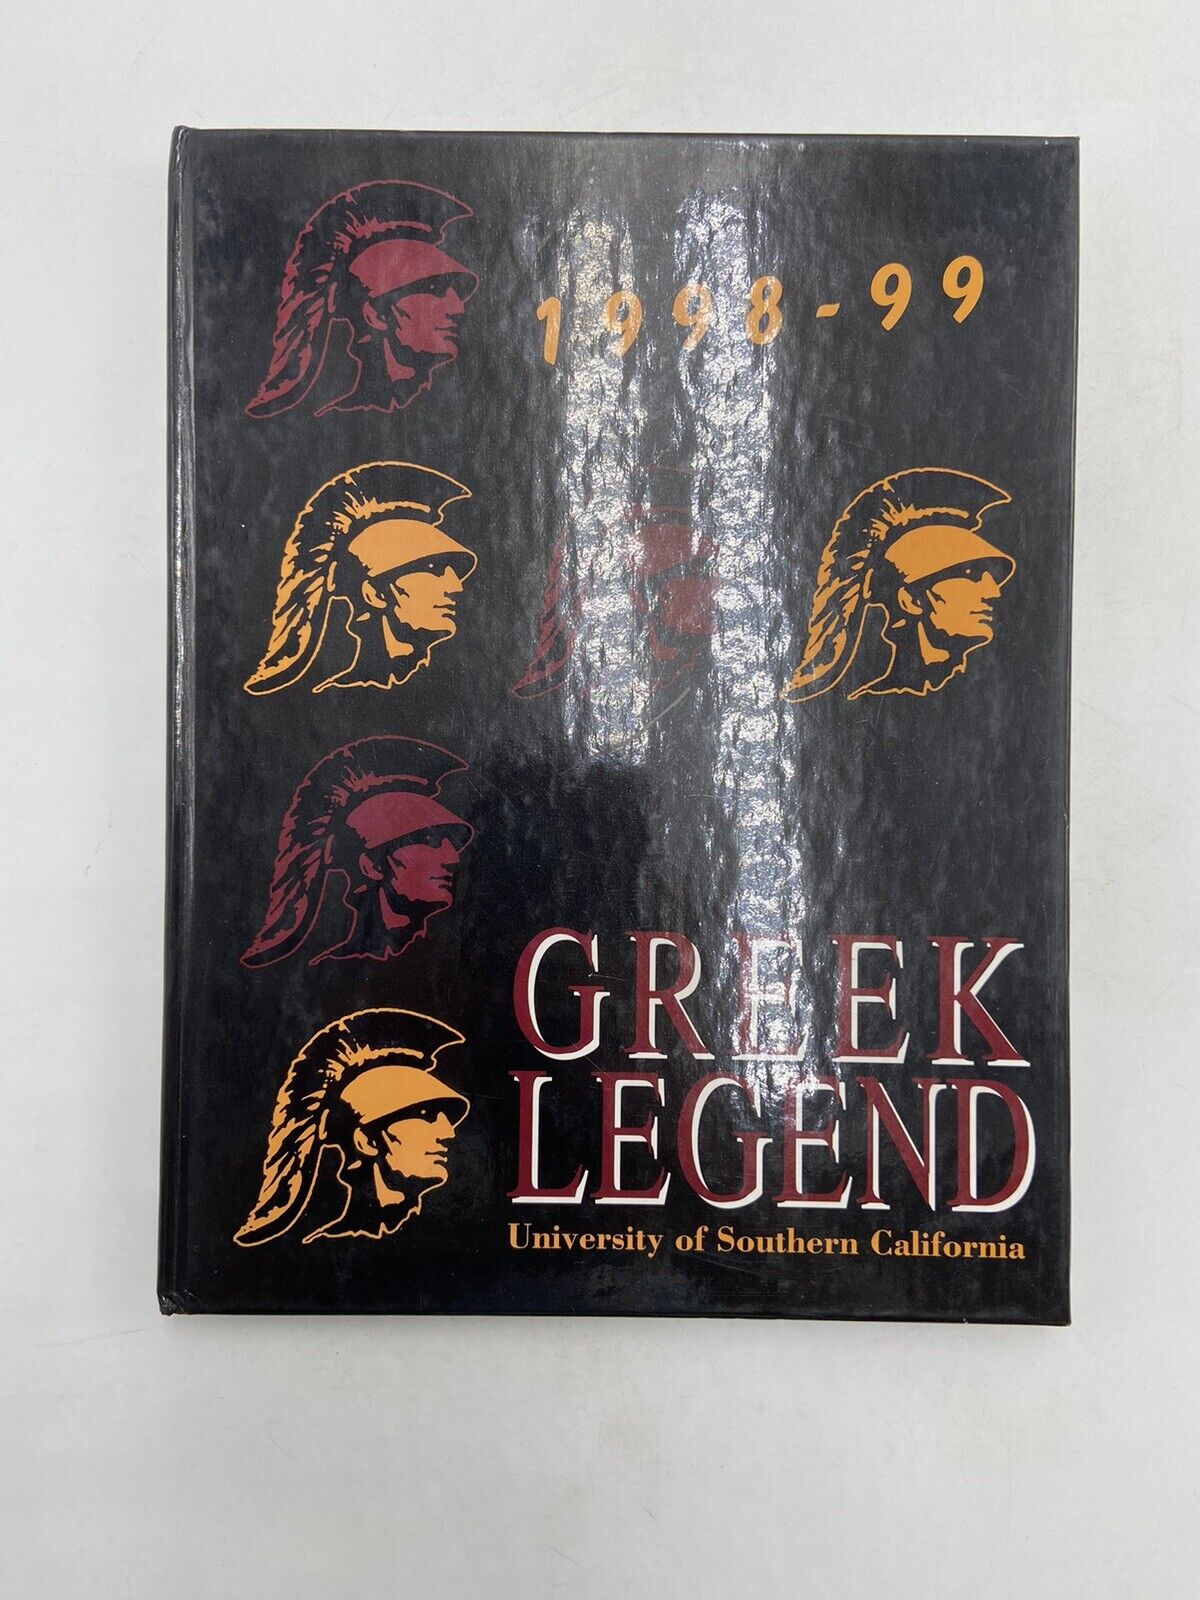 USC UNIVERSITY OF SOUTHERN CALIFORNIA 1998-99 YEARBOOK GREEK LEGEND